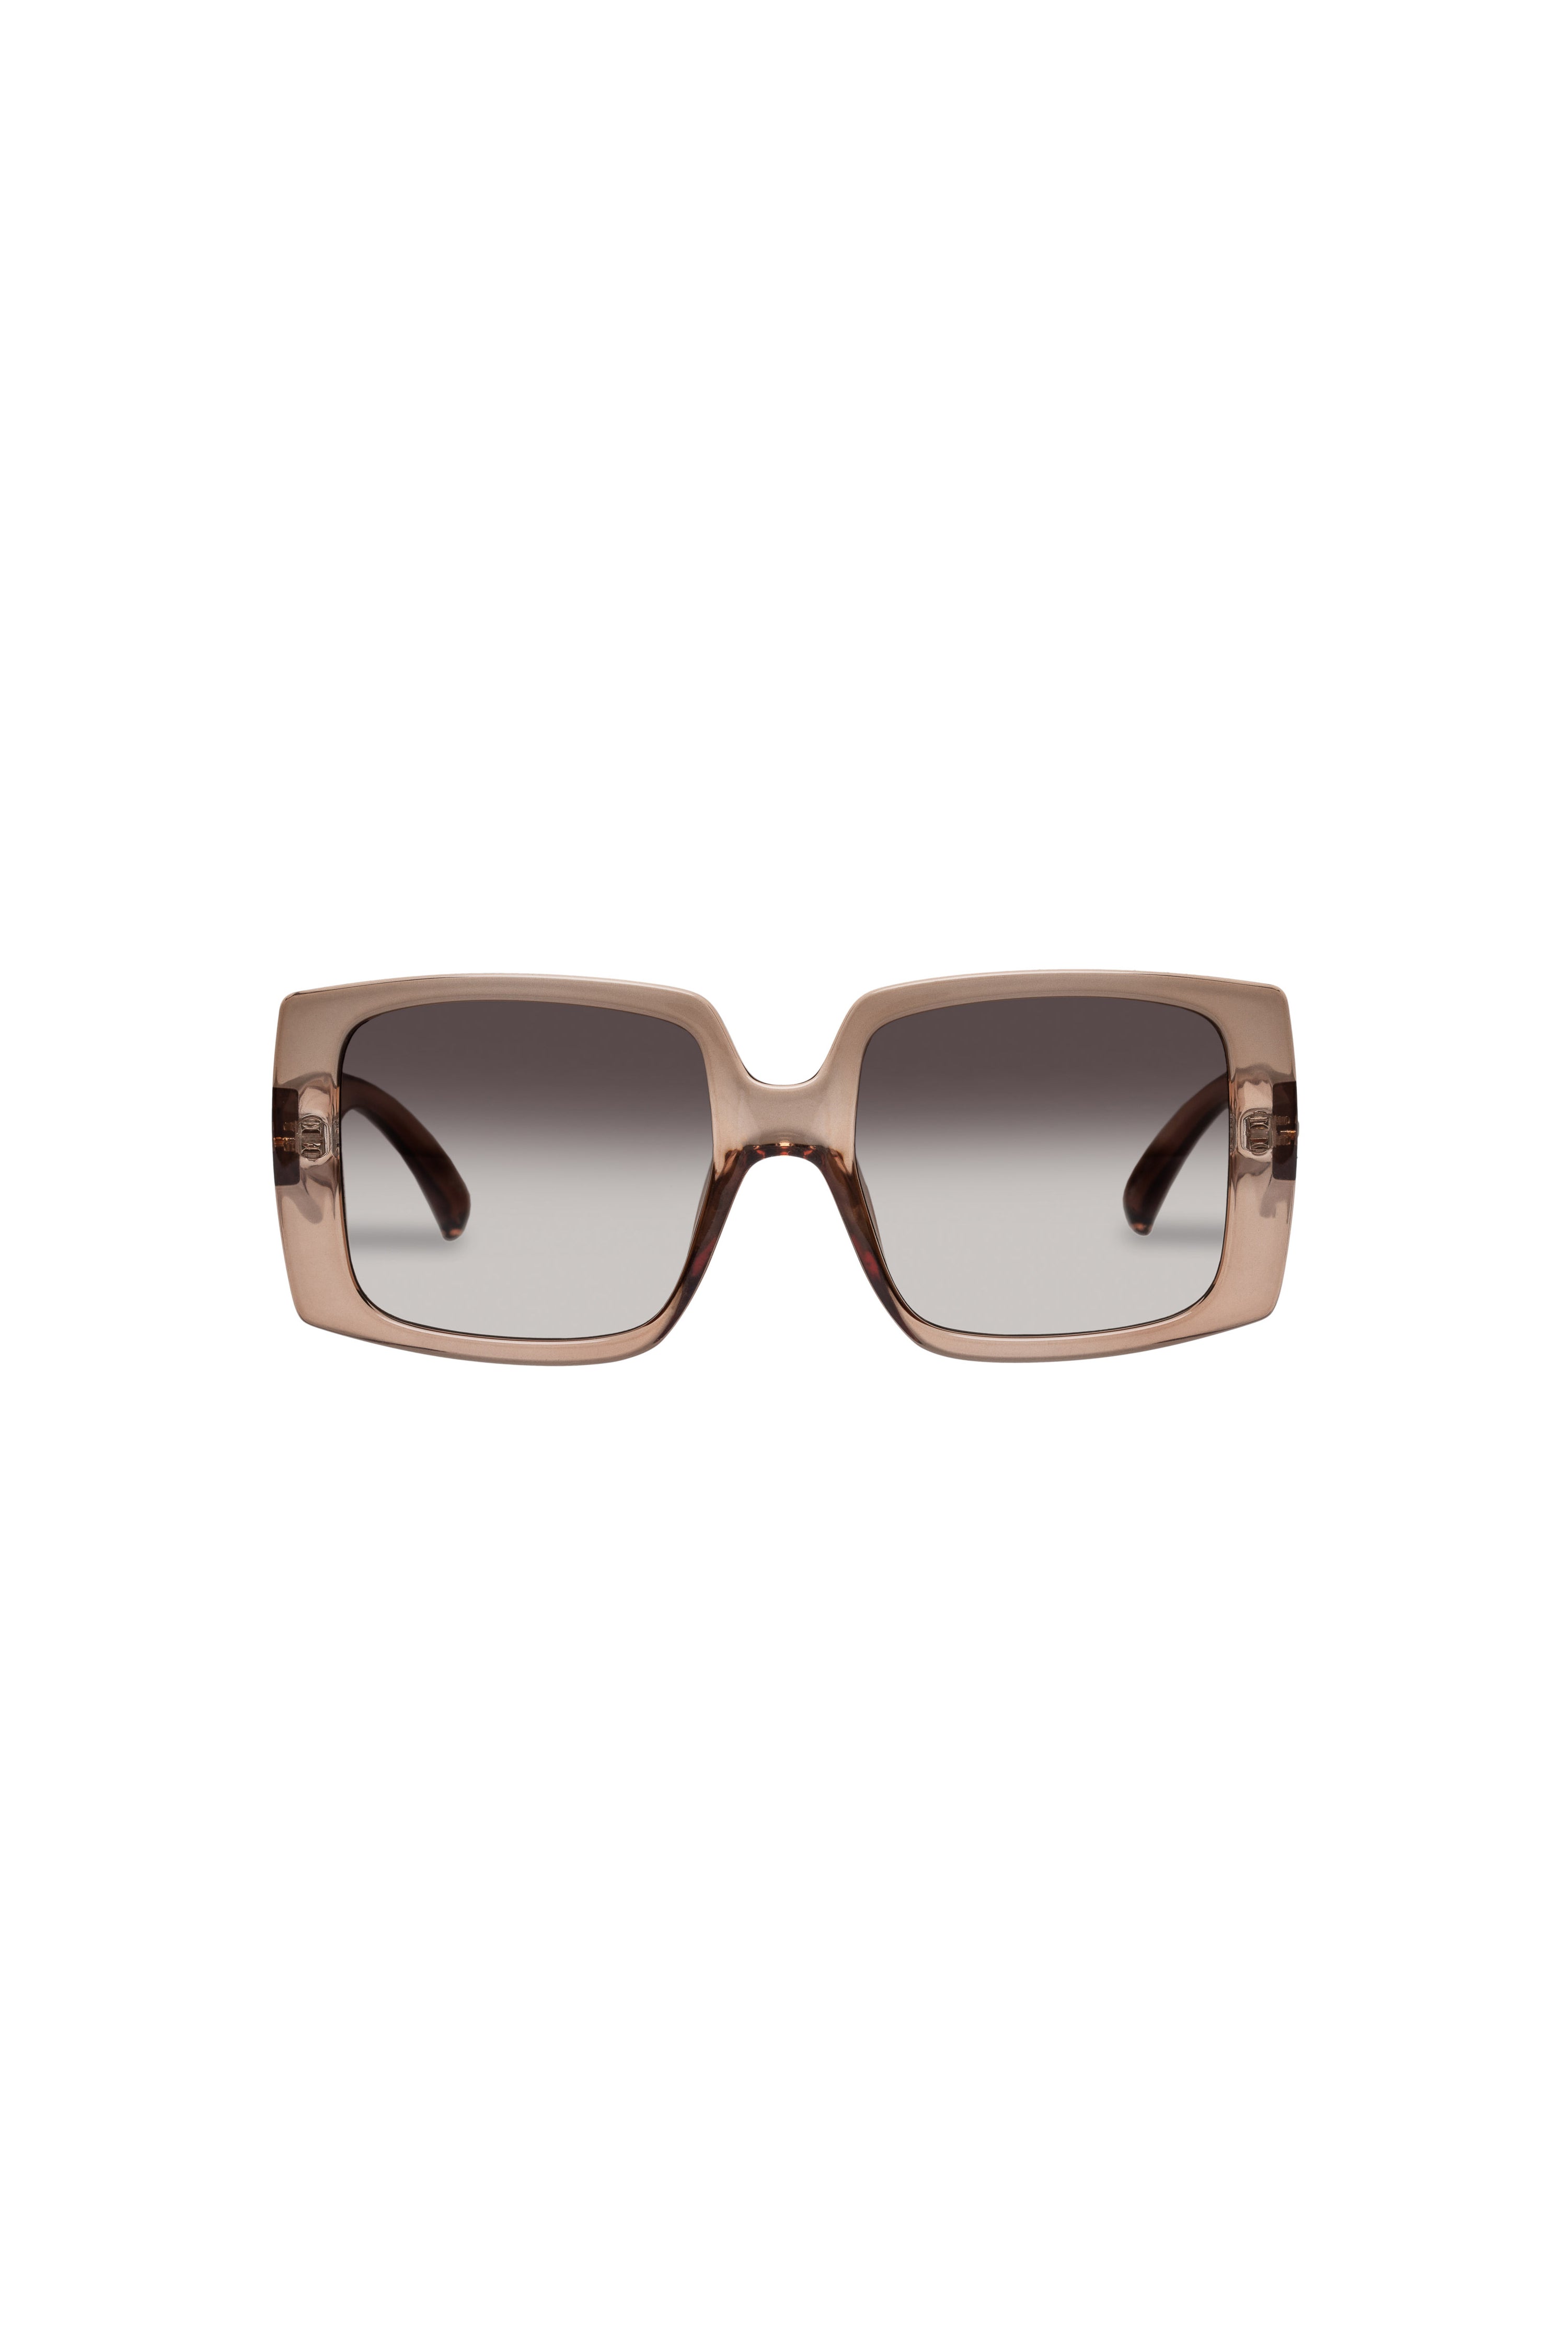 Le Specs Glo Getter Sunglasses - Pebble - RUM Amsterdam